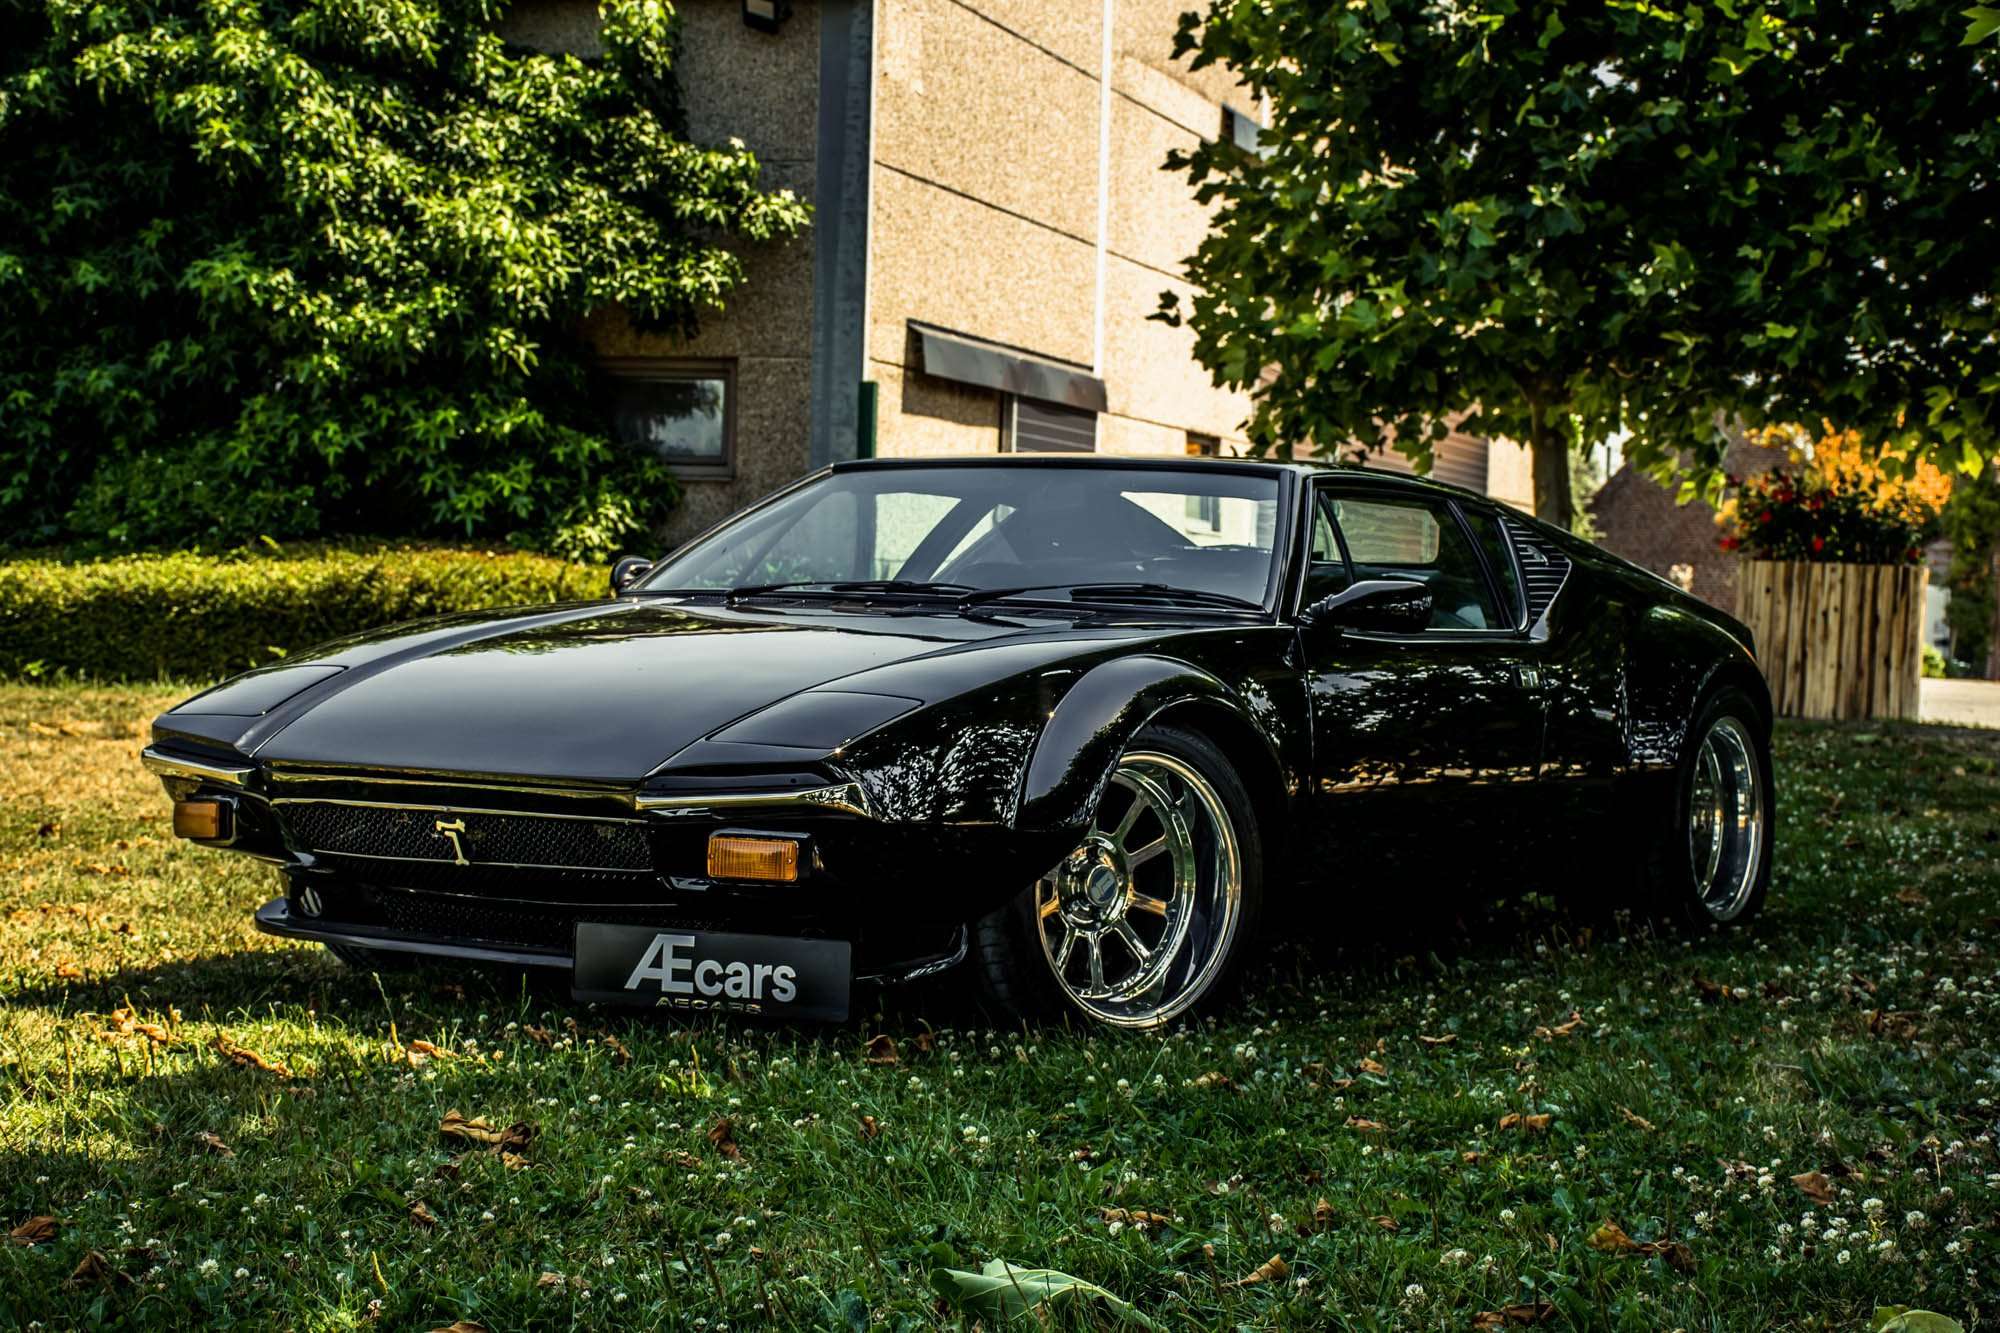 De Tomaso Pantera Coupe in Black used in Izegem for € 114,950.-